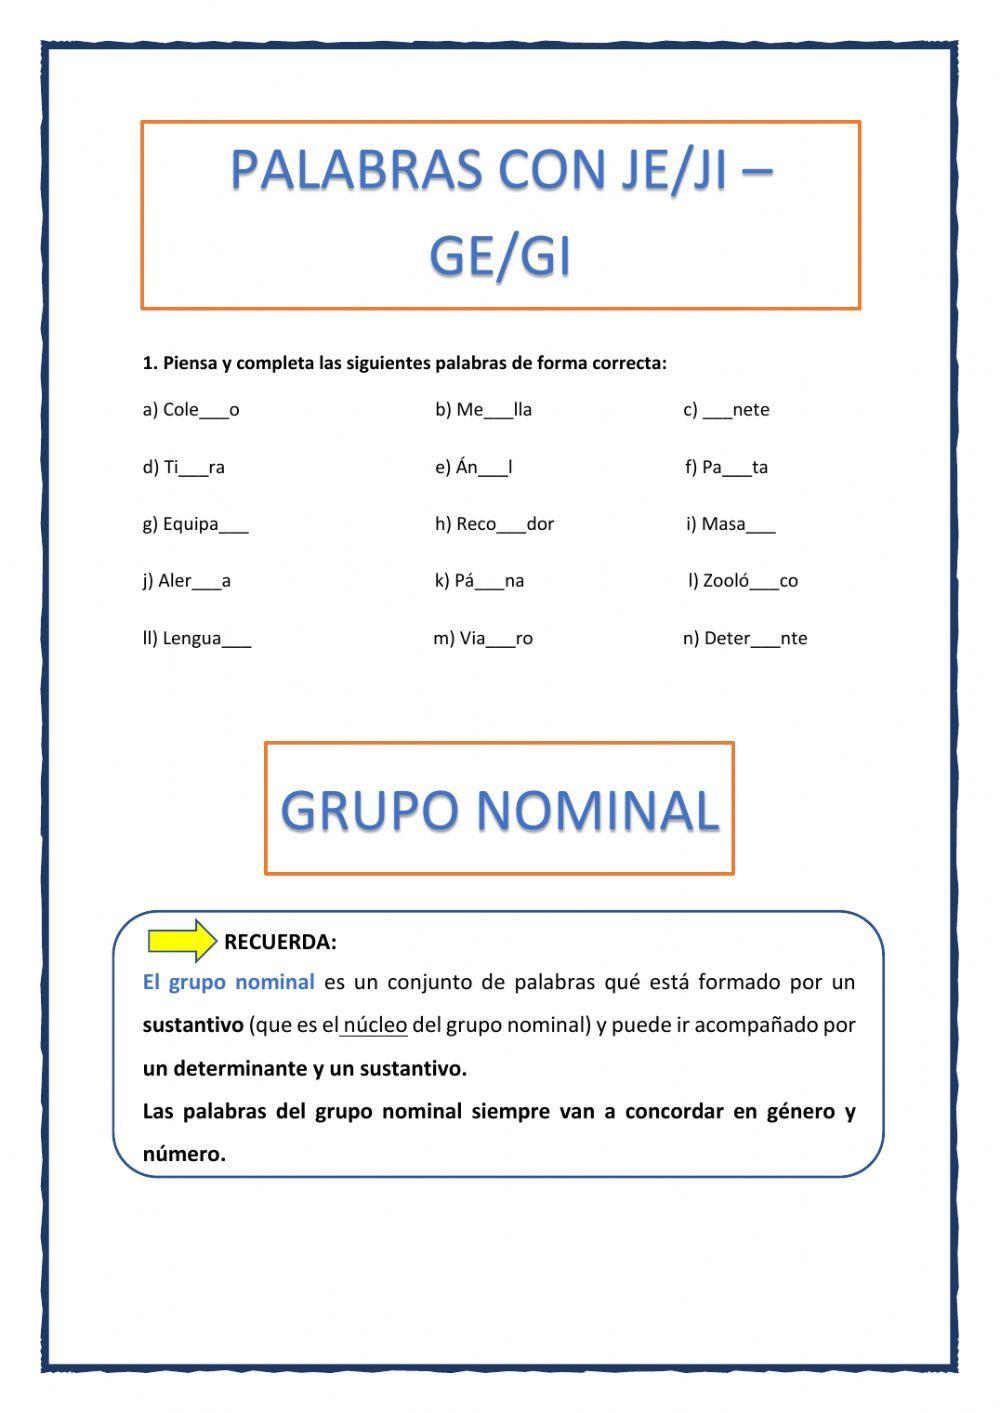 Palabras con JE-JI--GE-GI y grupo nominal